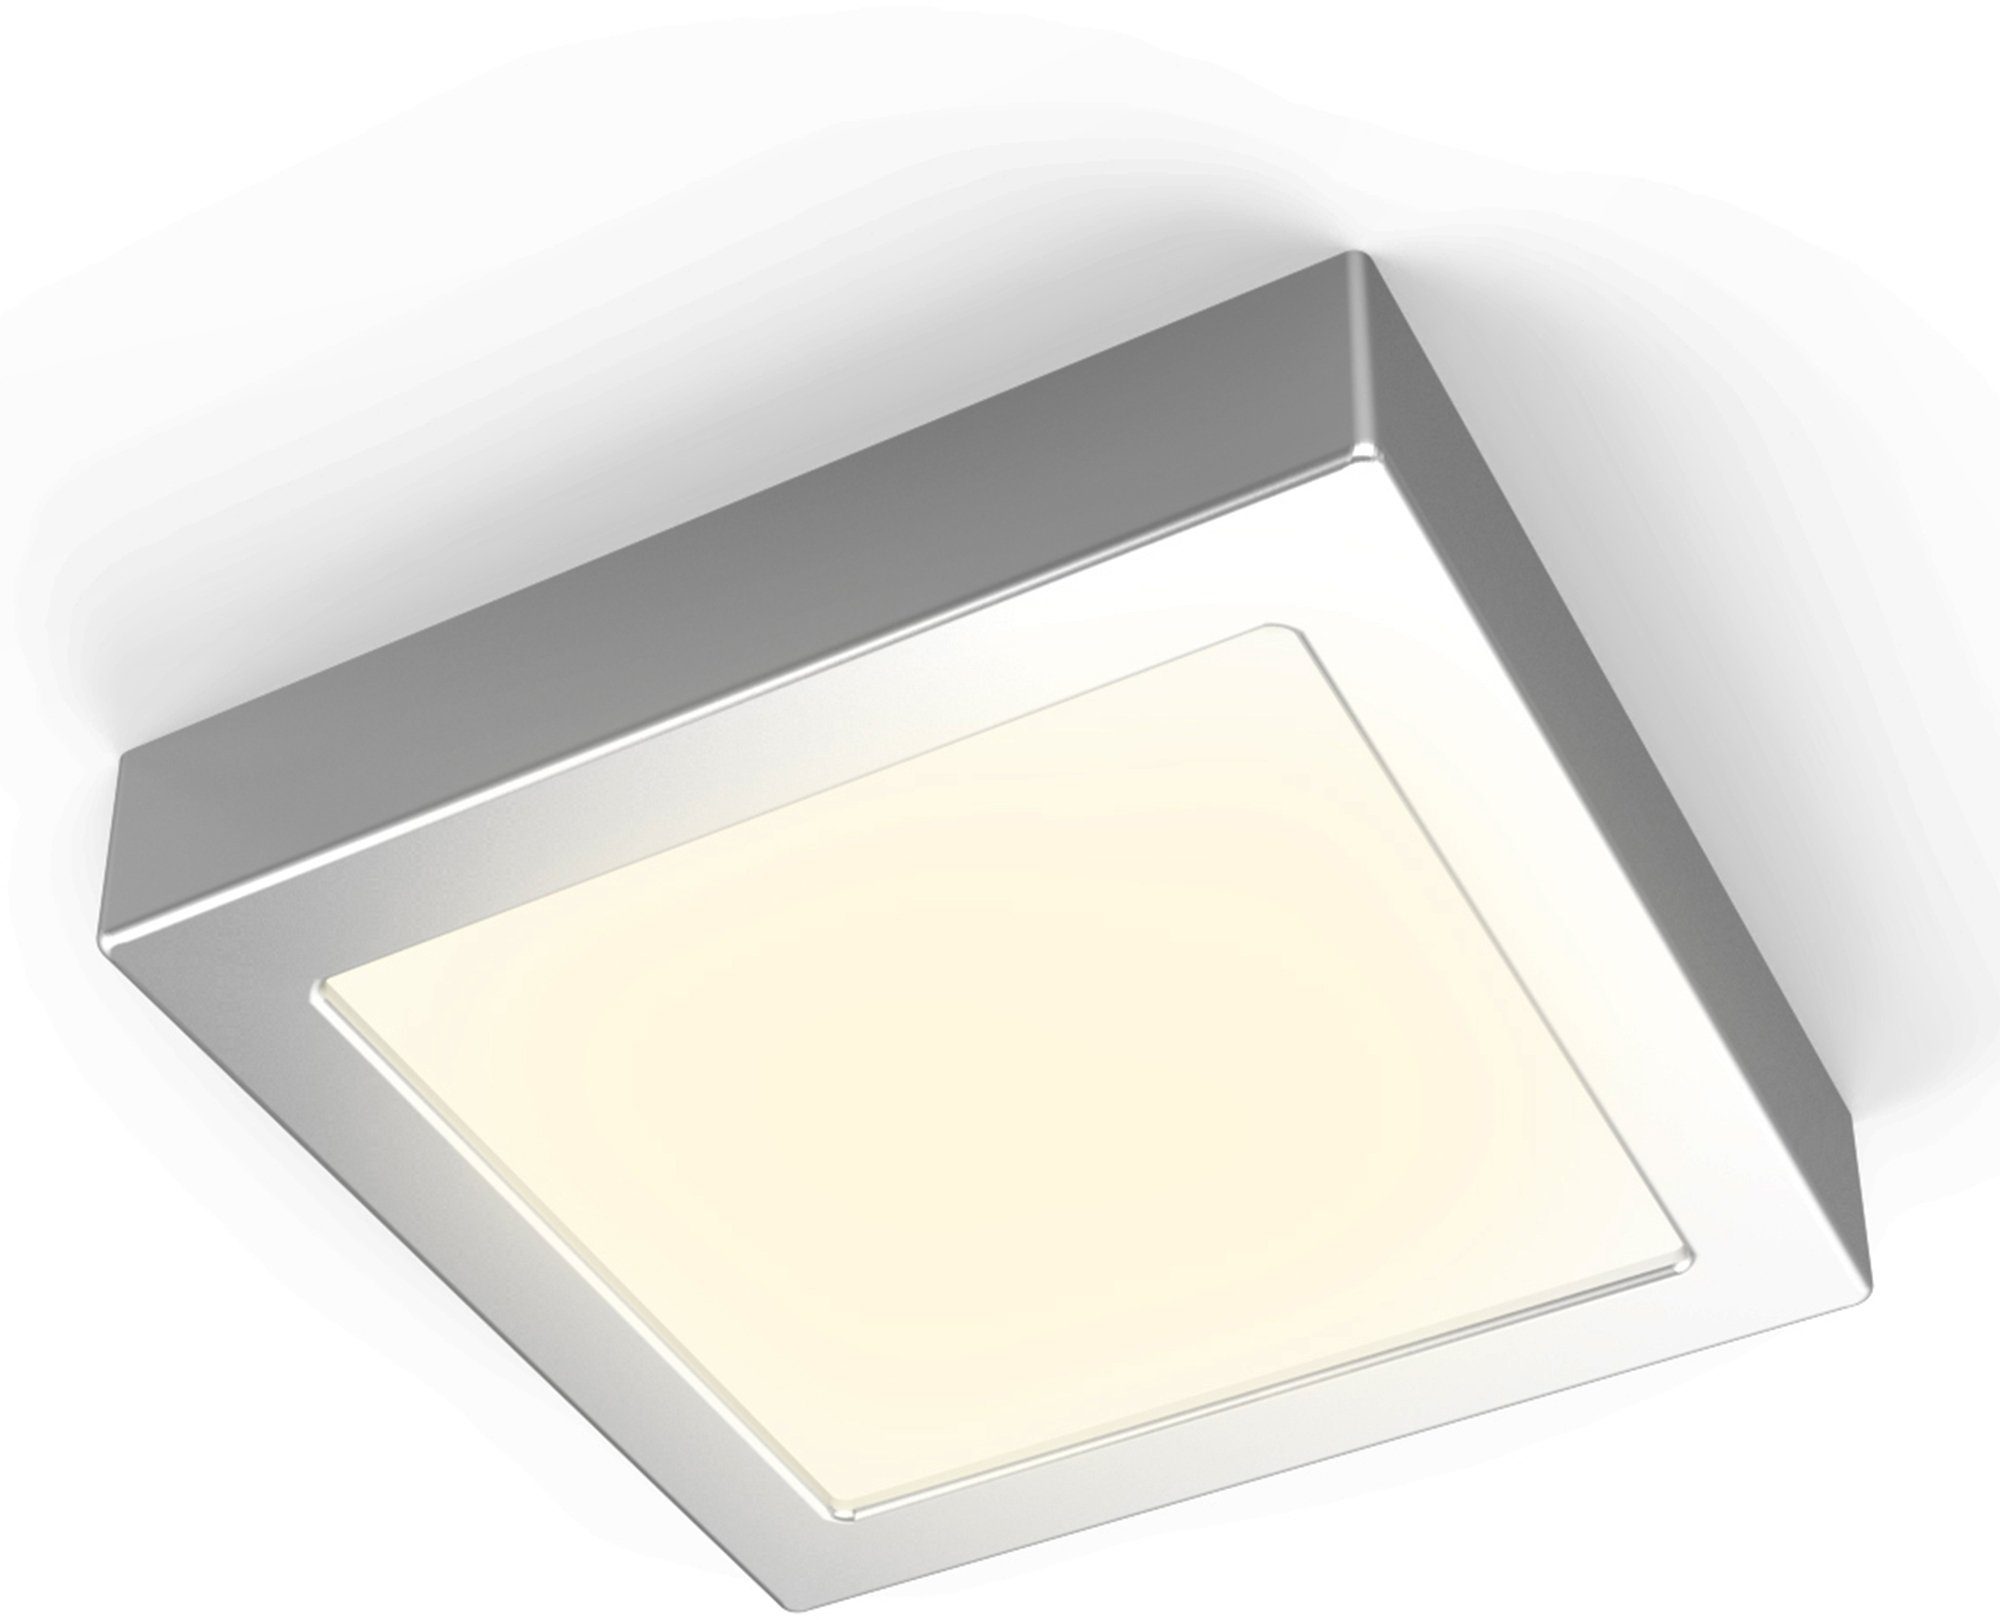 LED LED B.K.Licht 12W LED fest Garnet, Unterbauleuchte Warmweiß, Panel Aufputzspot integriert, Aufbauleuchte Aufbaustrahler Lampe